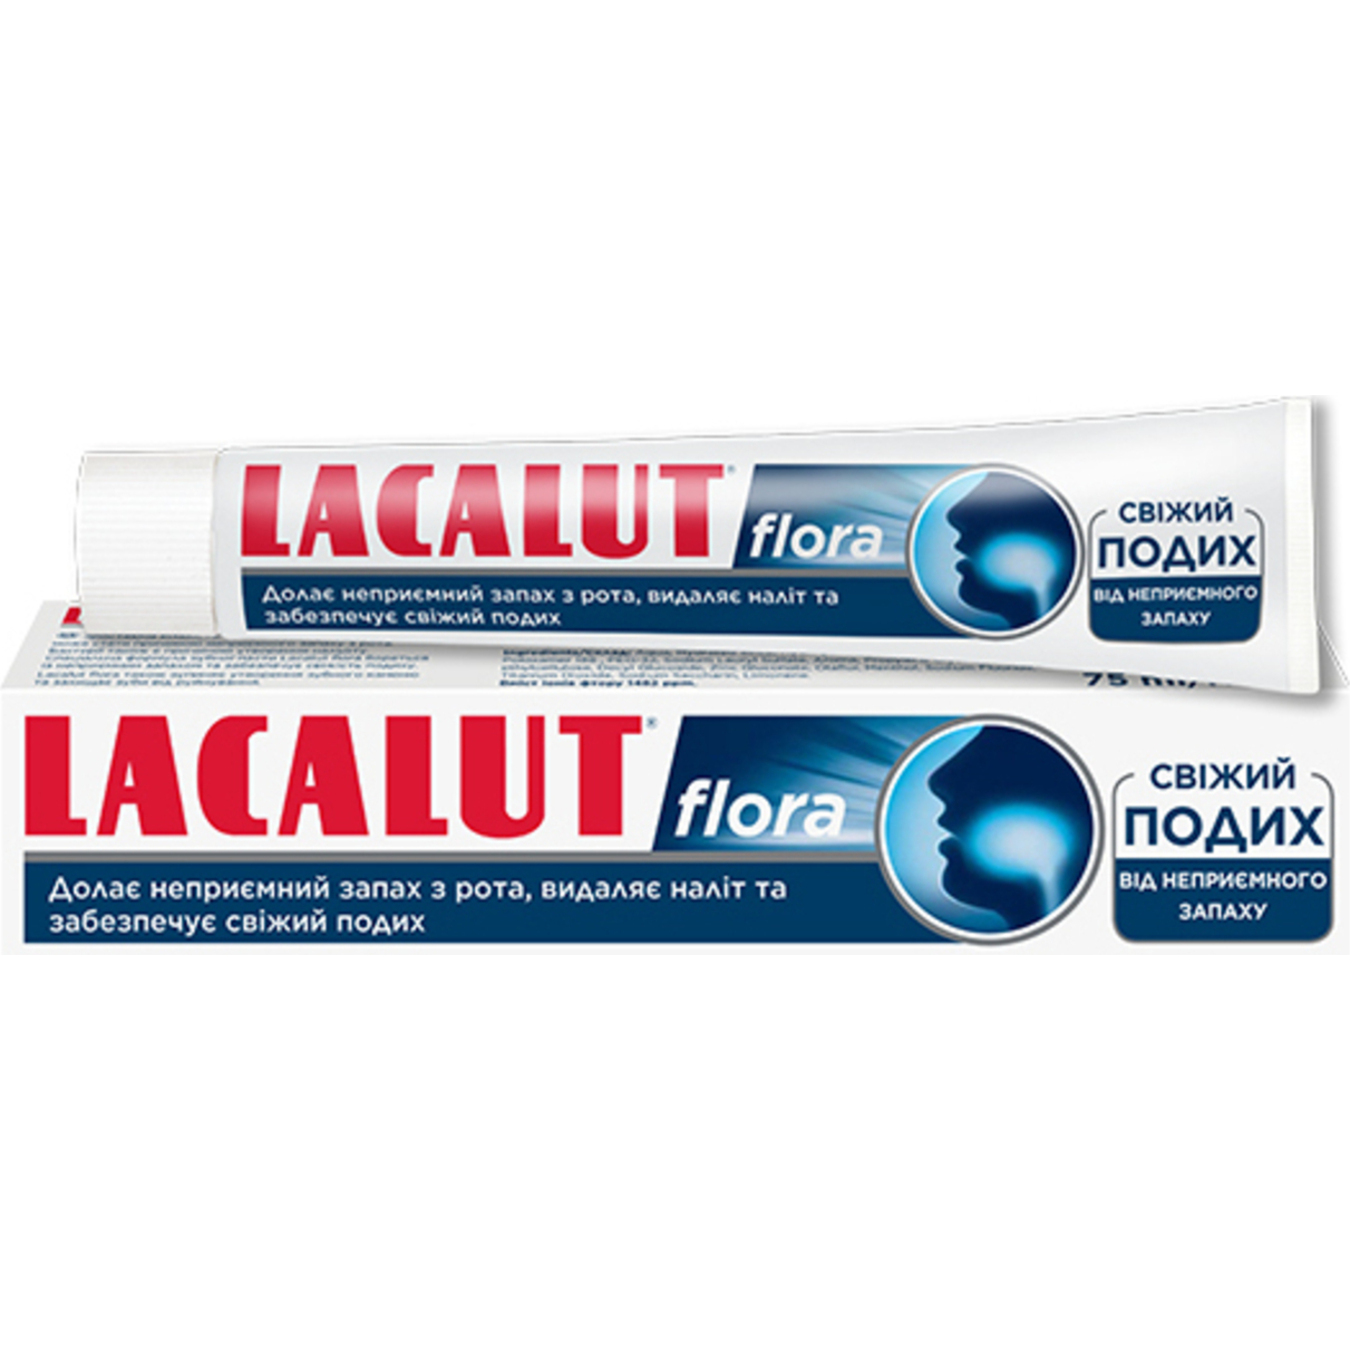 Toothpaste Lacalut flora 75 ml